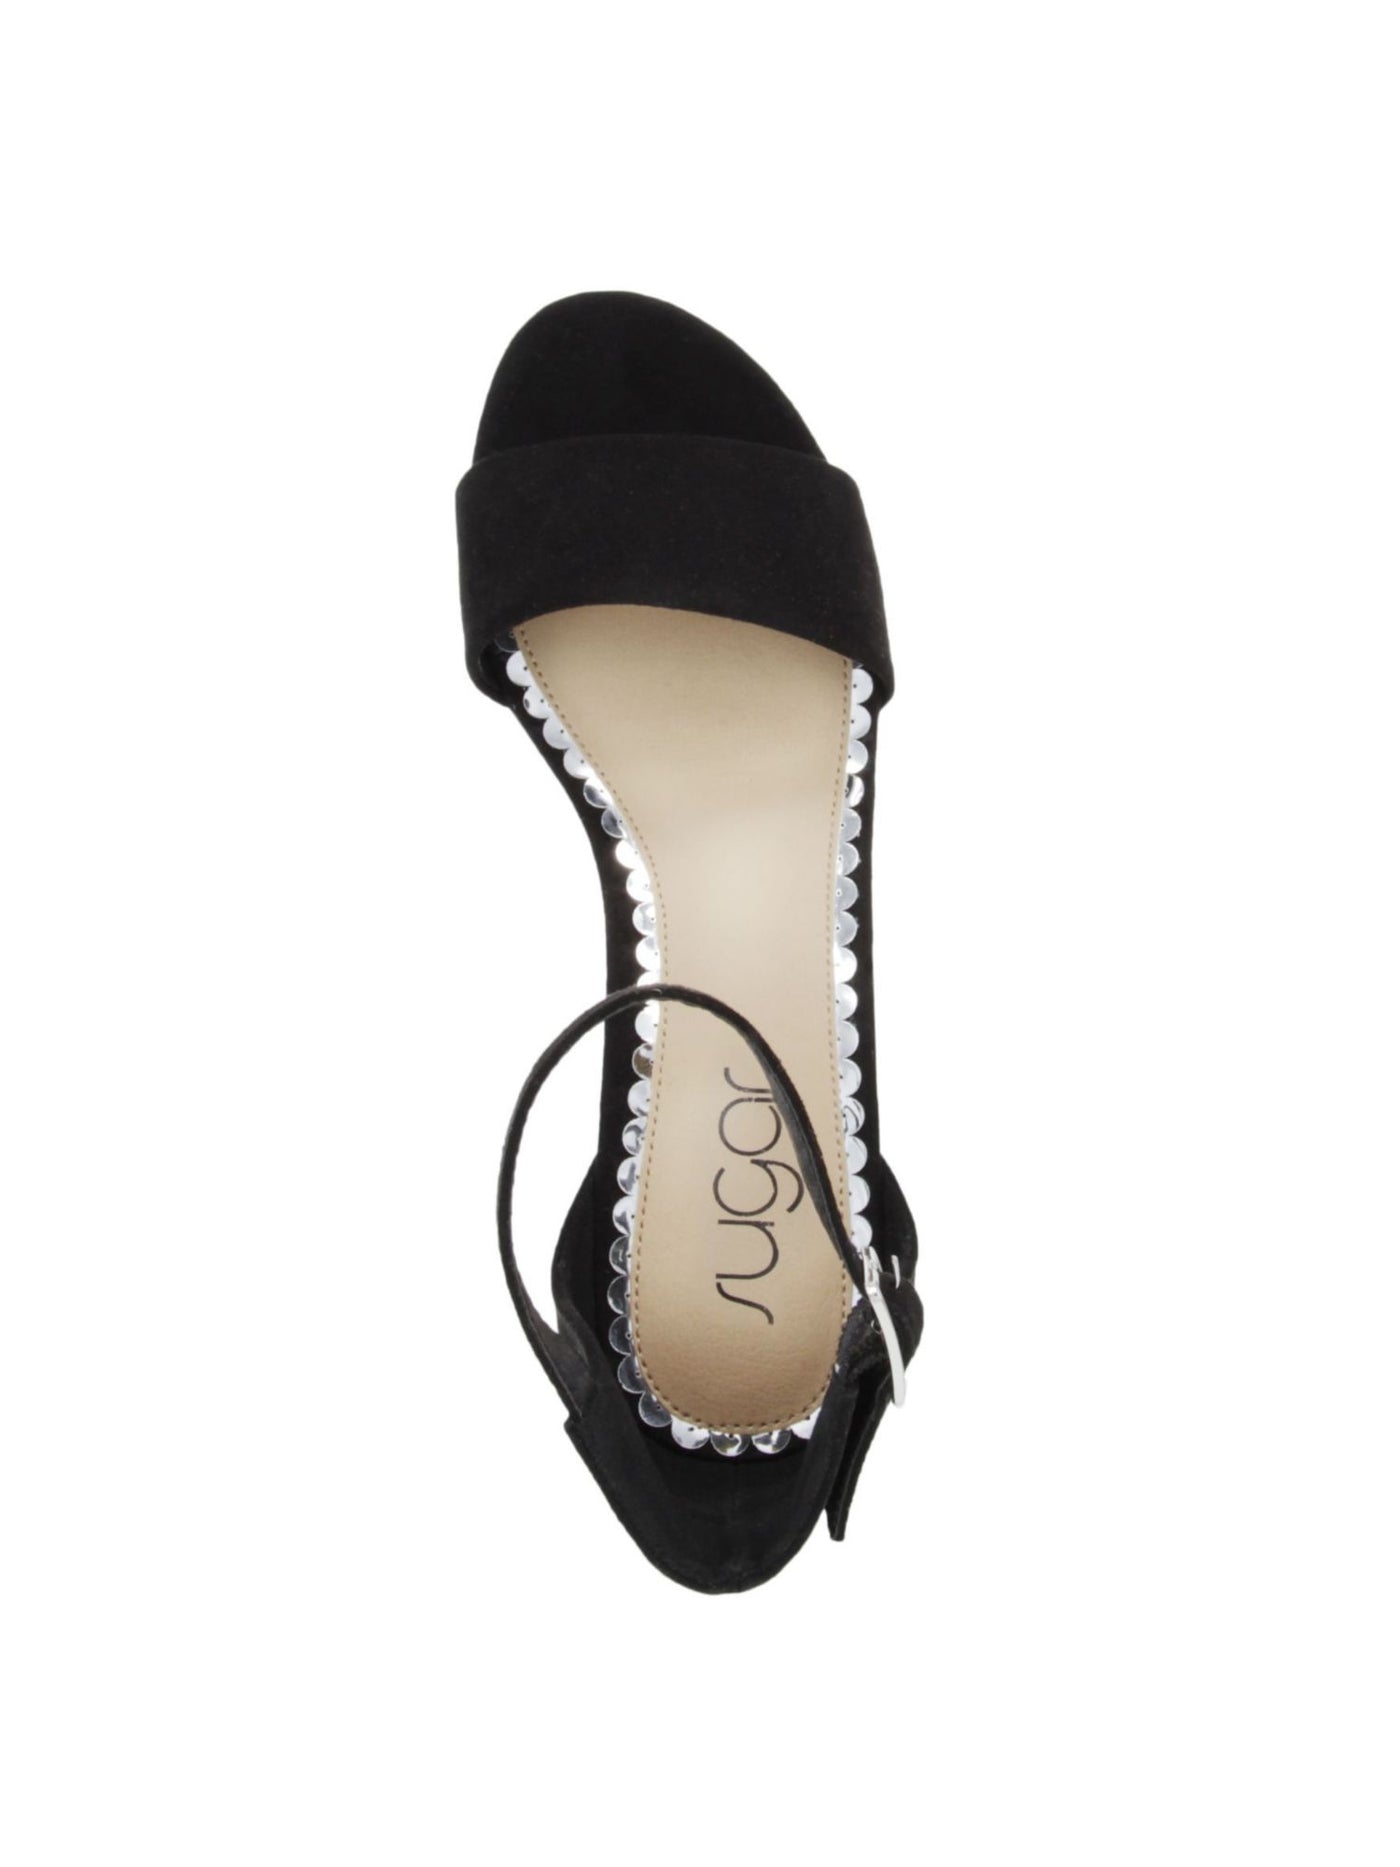 SUGAR Womens Black See-Through Strap Padded Comfort Noelle Round Toe Block Heel Buckle Dress Sandals 8 M